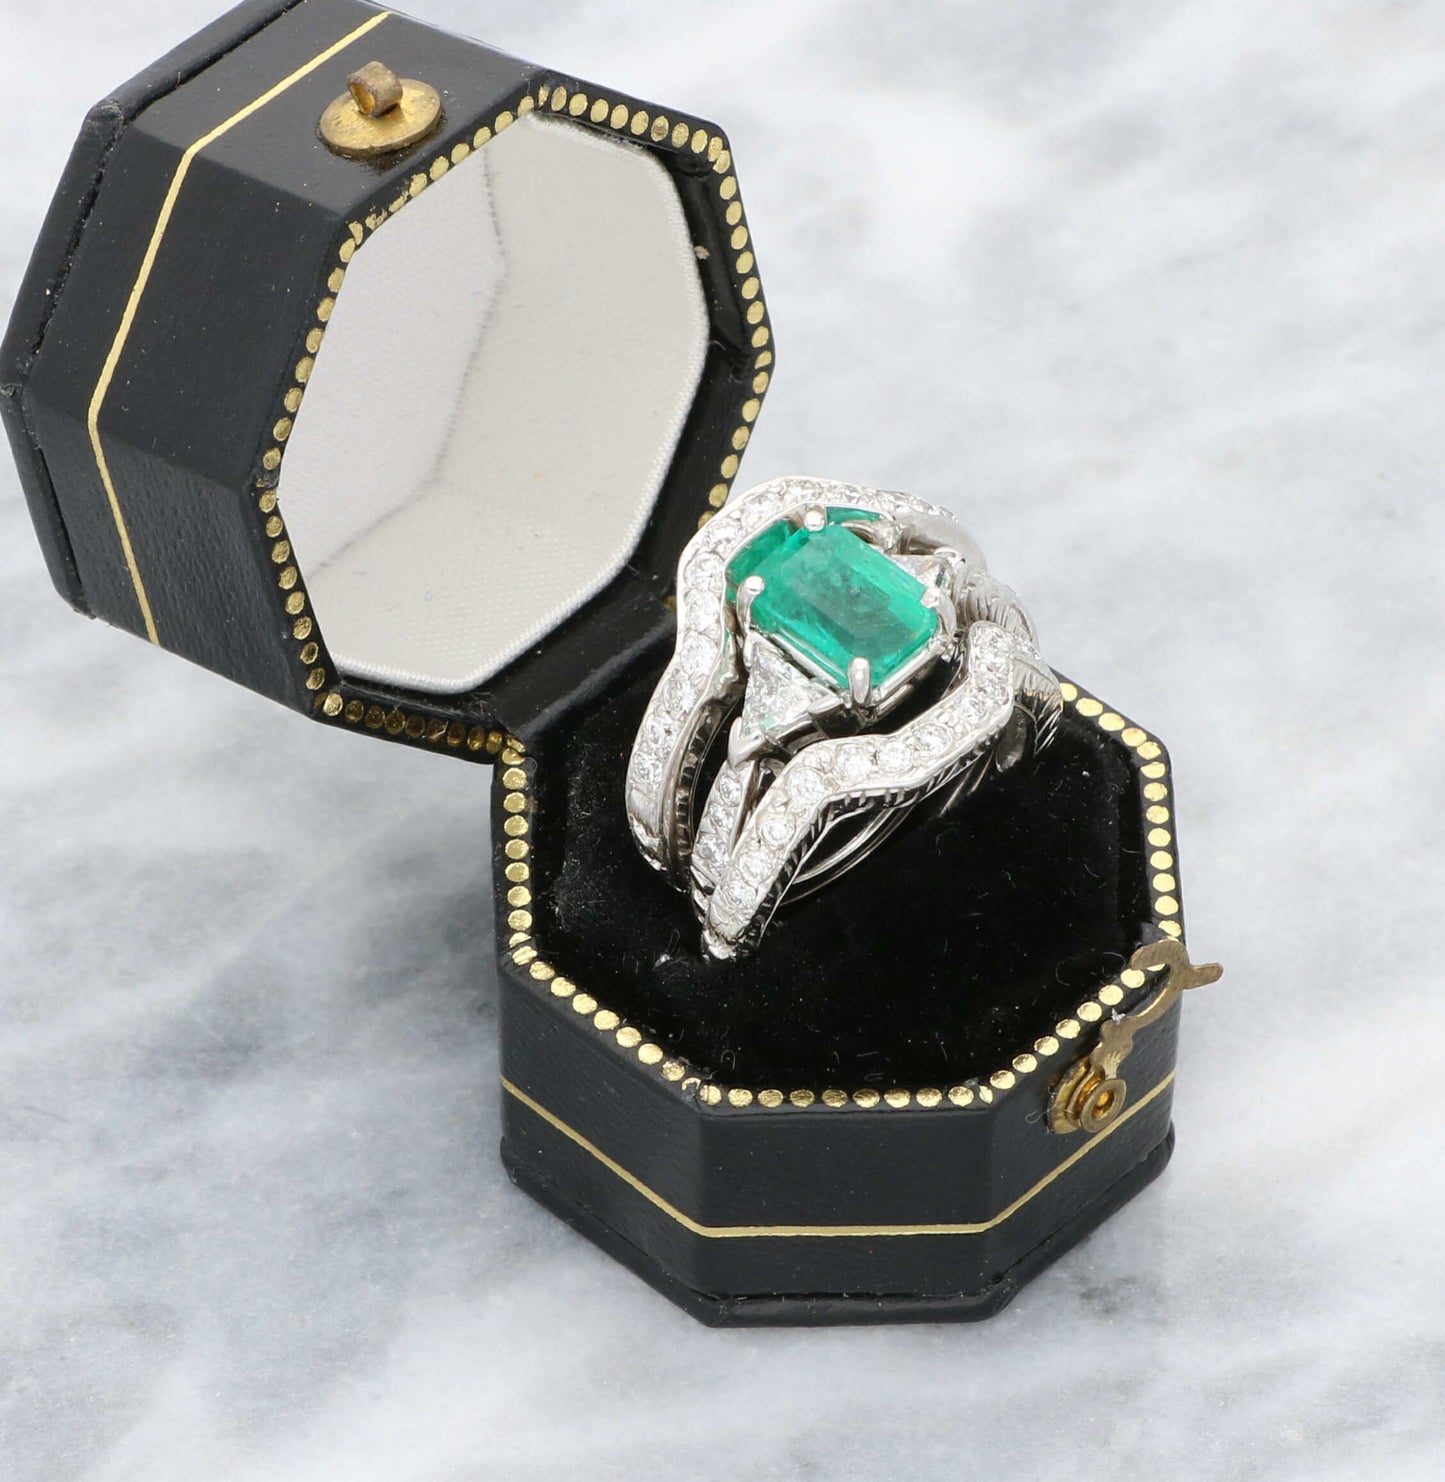 14ct emerald and diamond ring set